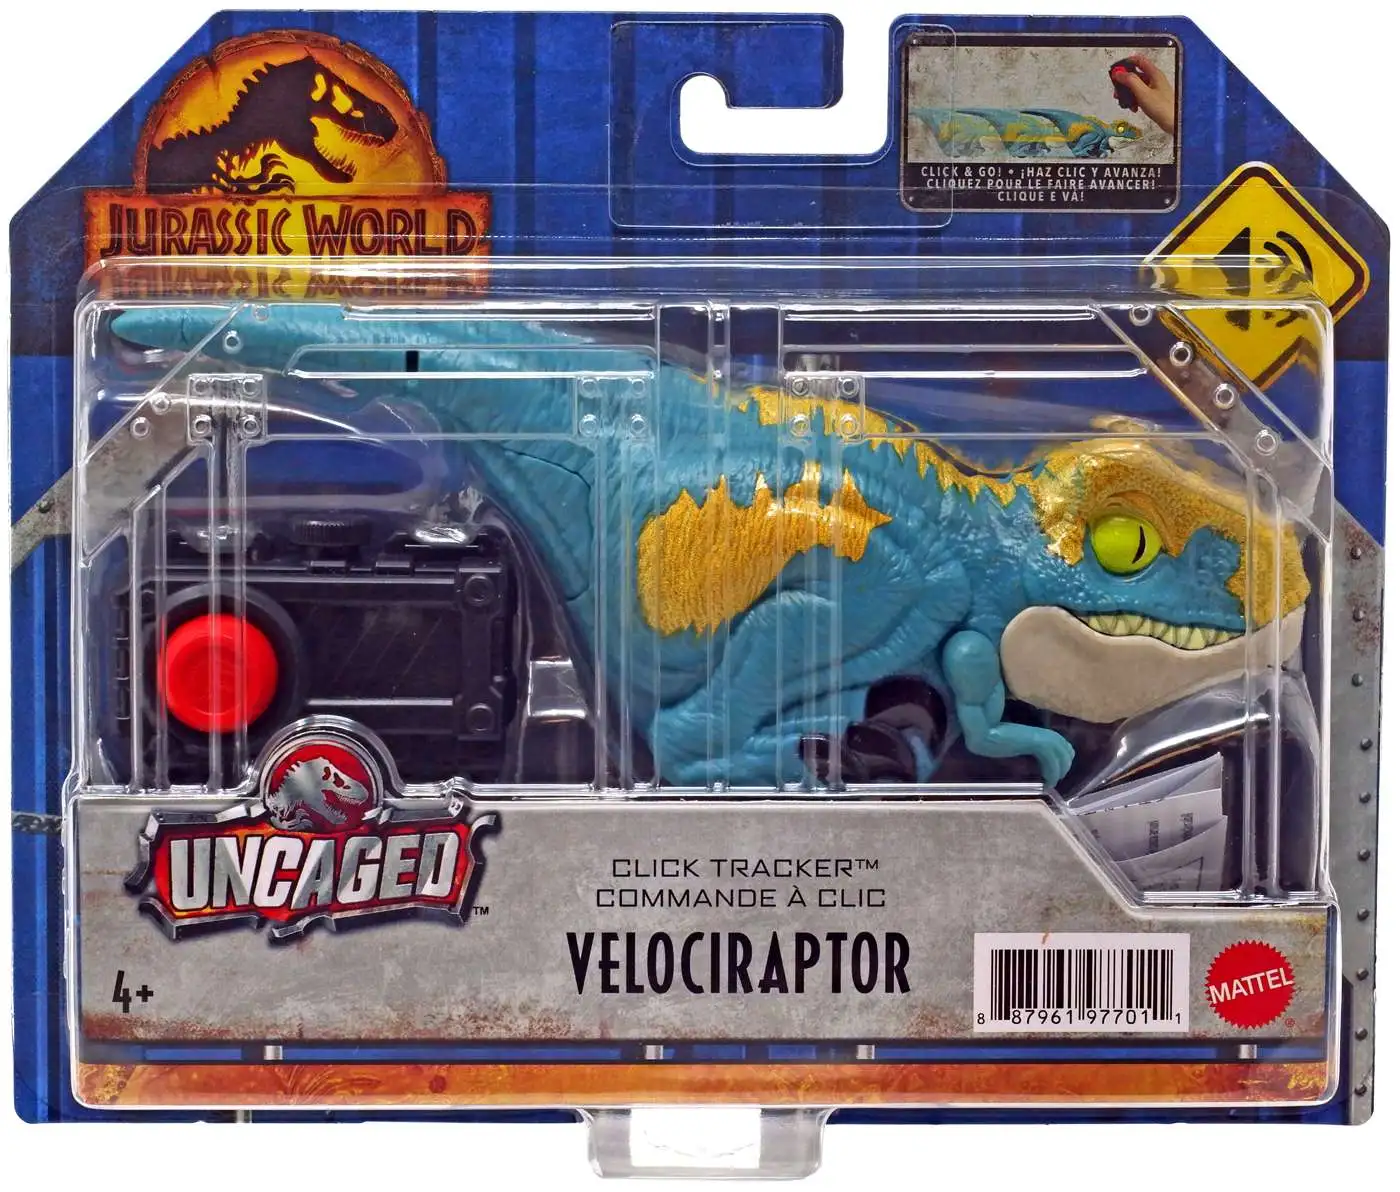 Jurassic World Dominion Uncaged Velociraptor Action Figure [Click Tracker, Blue & Yellow]